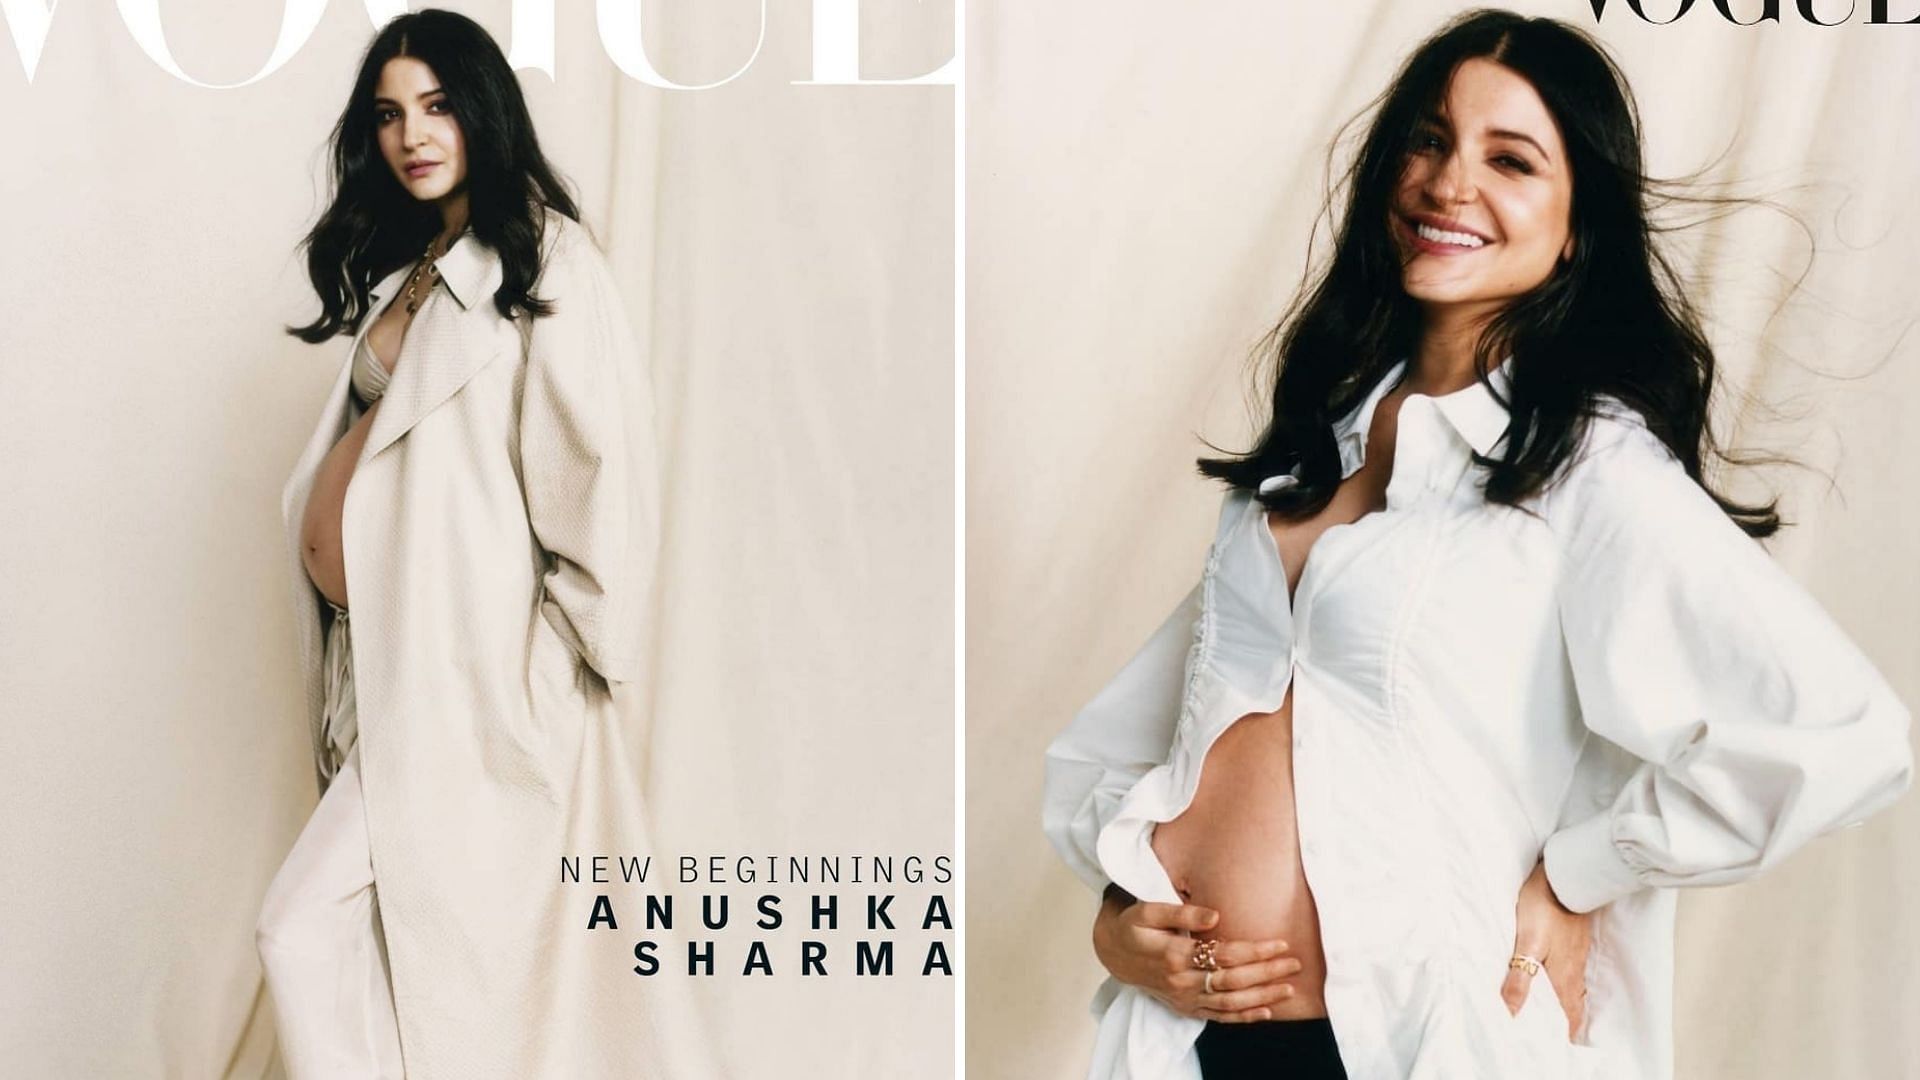 Anushka Sharma shows off her baby bump in new photoshoot.